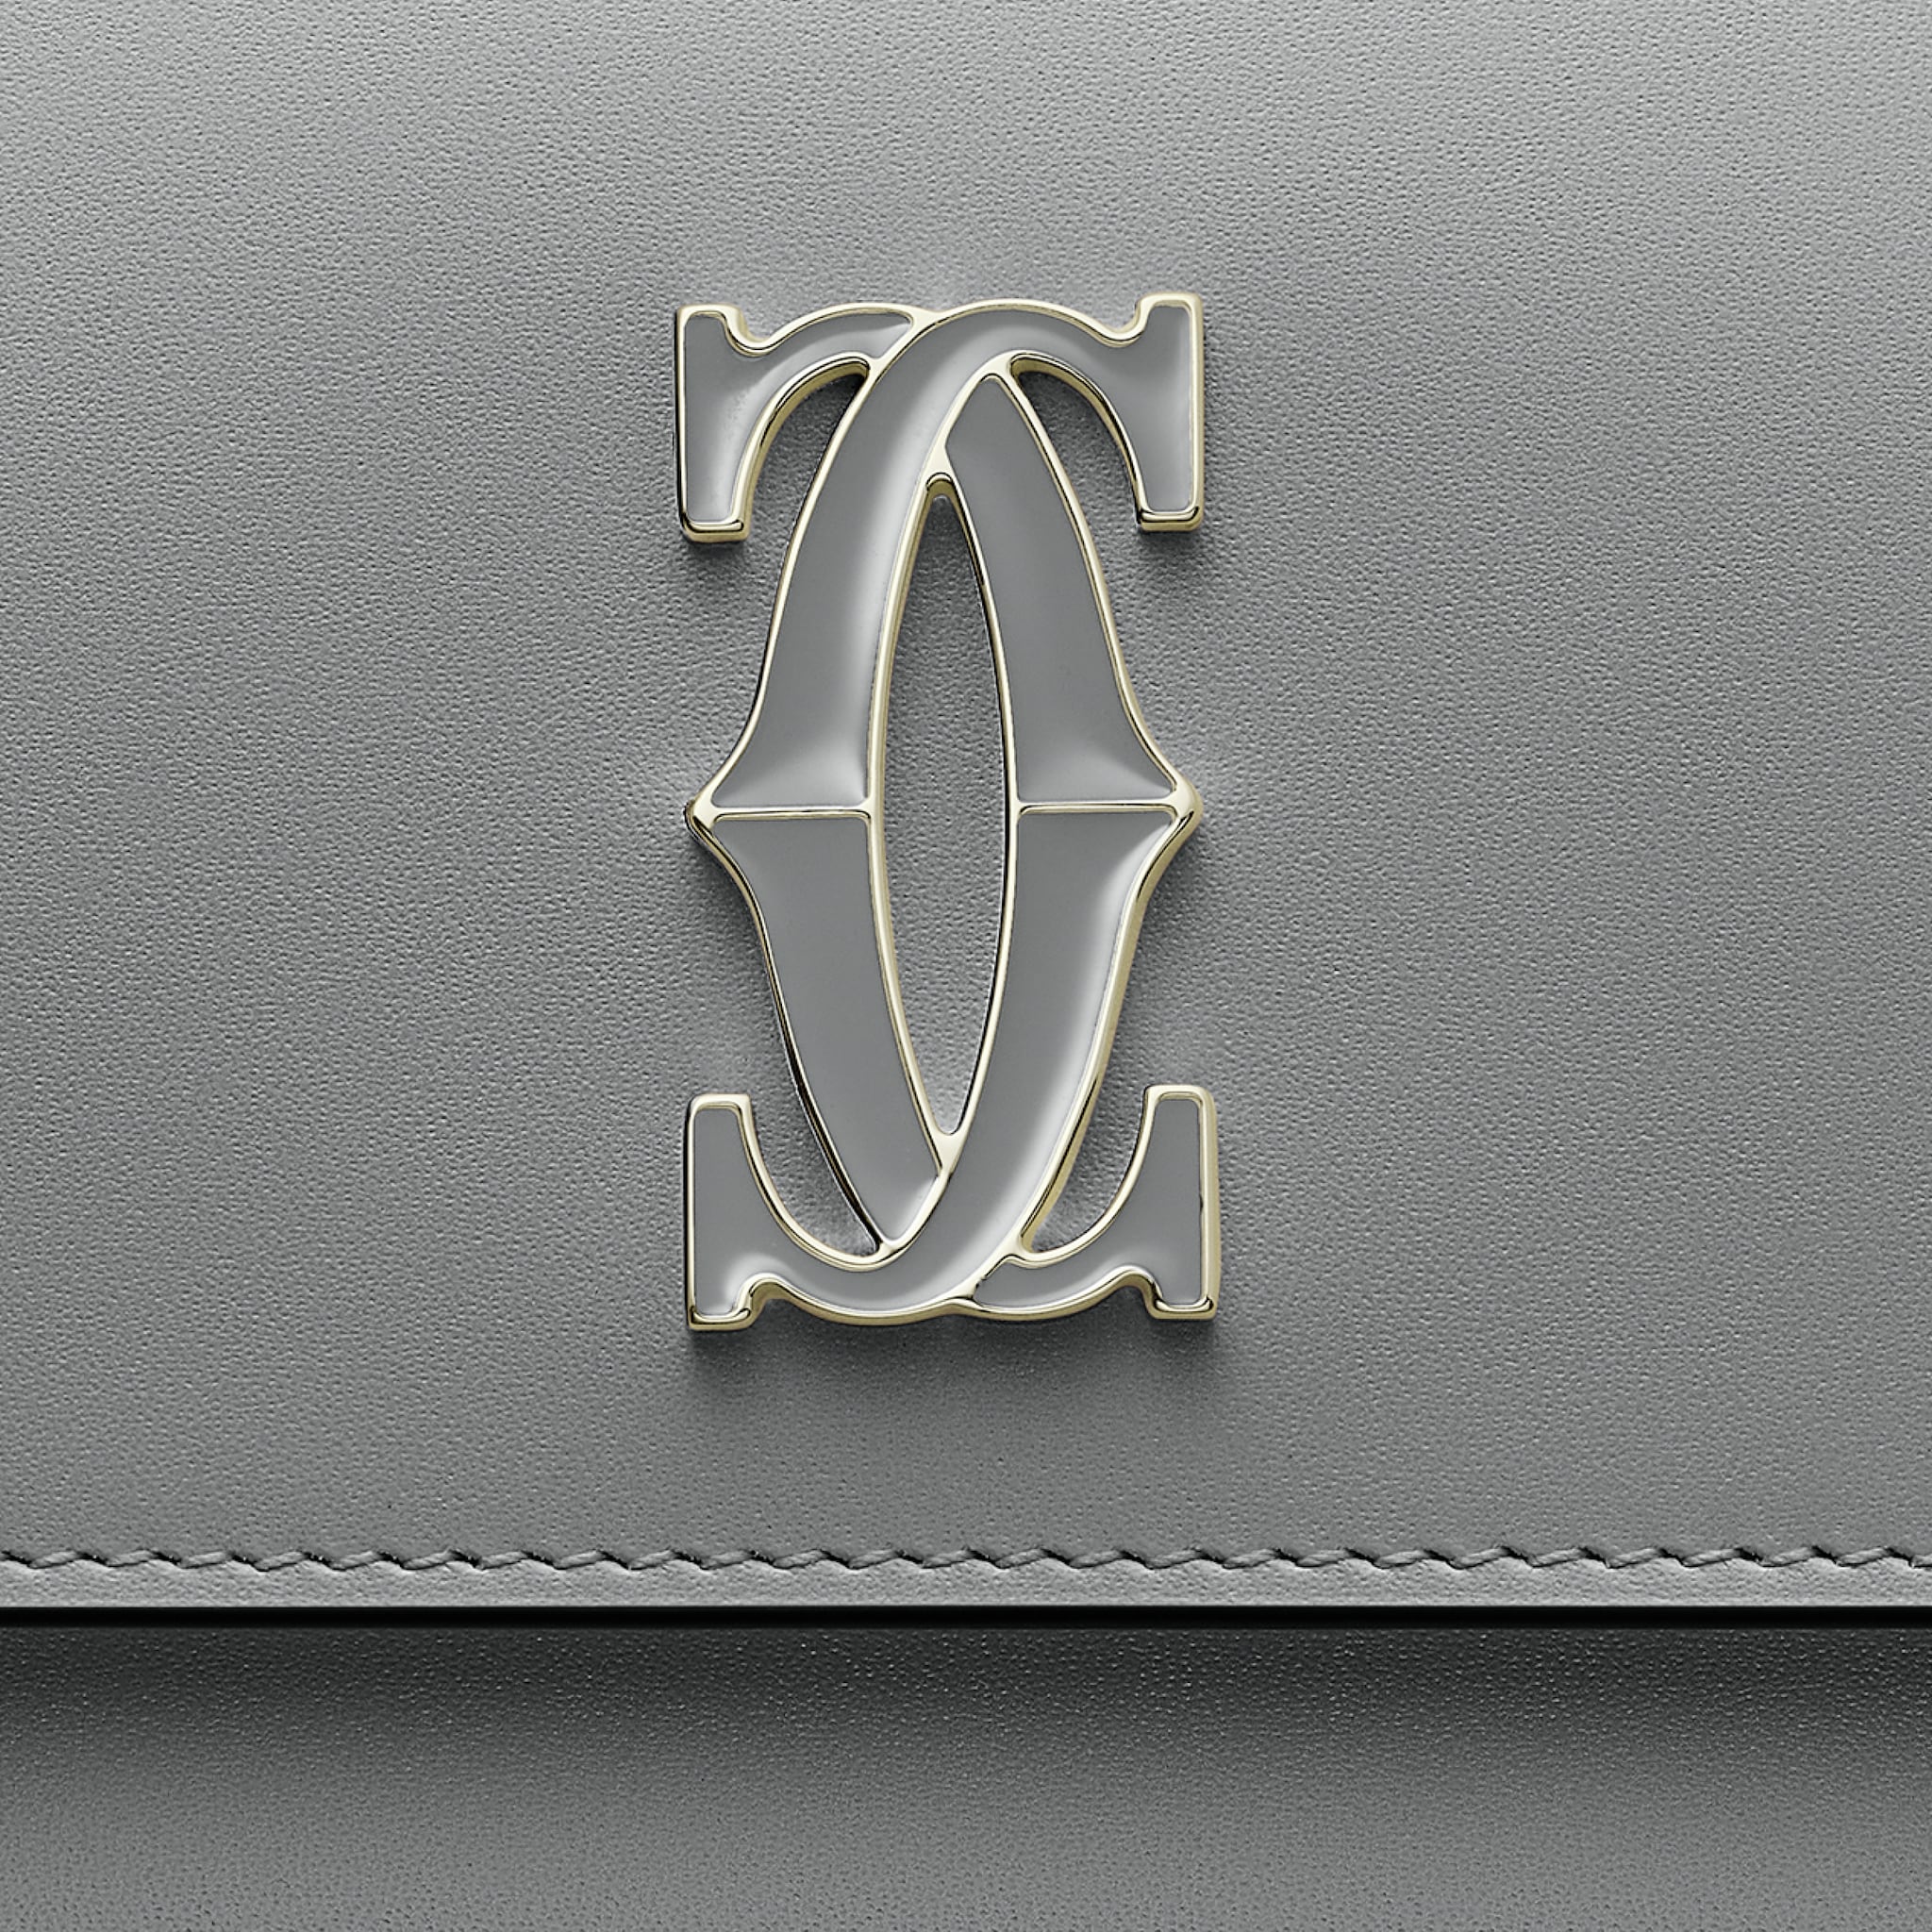 International wallet with flap, C de CartierGrey calfskin, grey enamel and golden finish